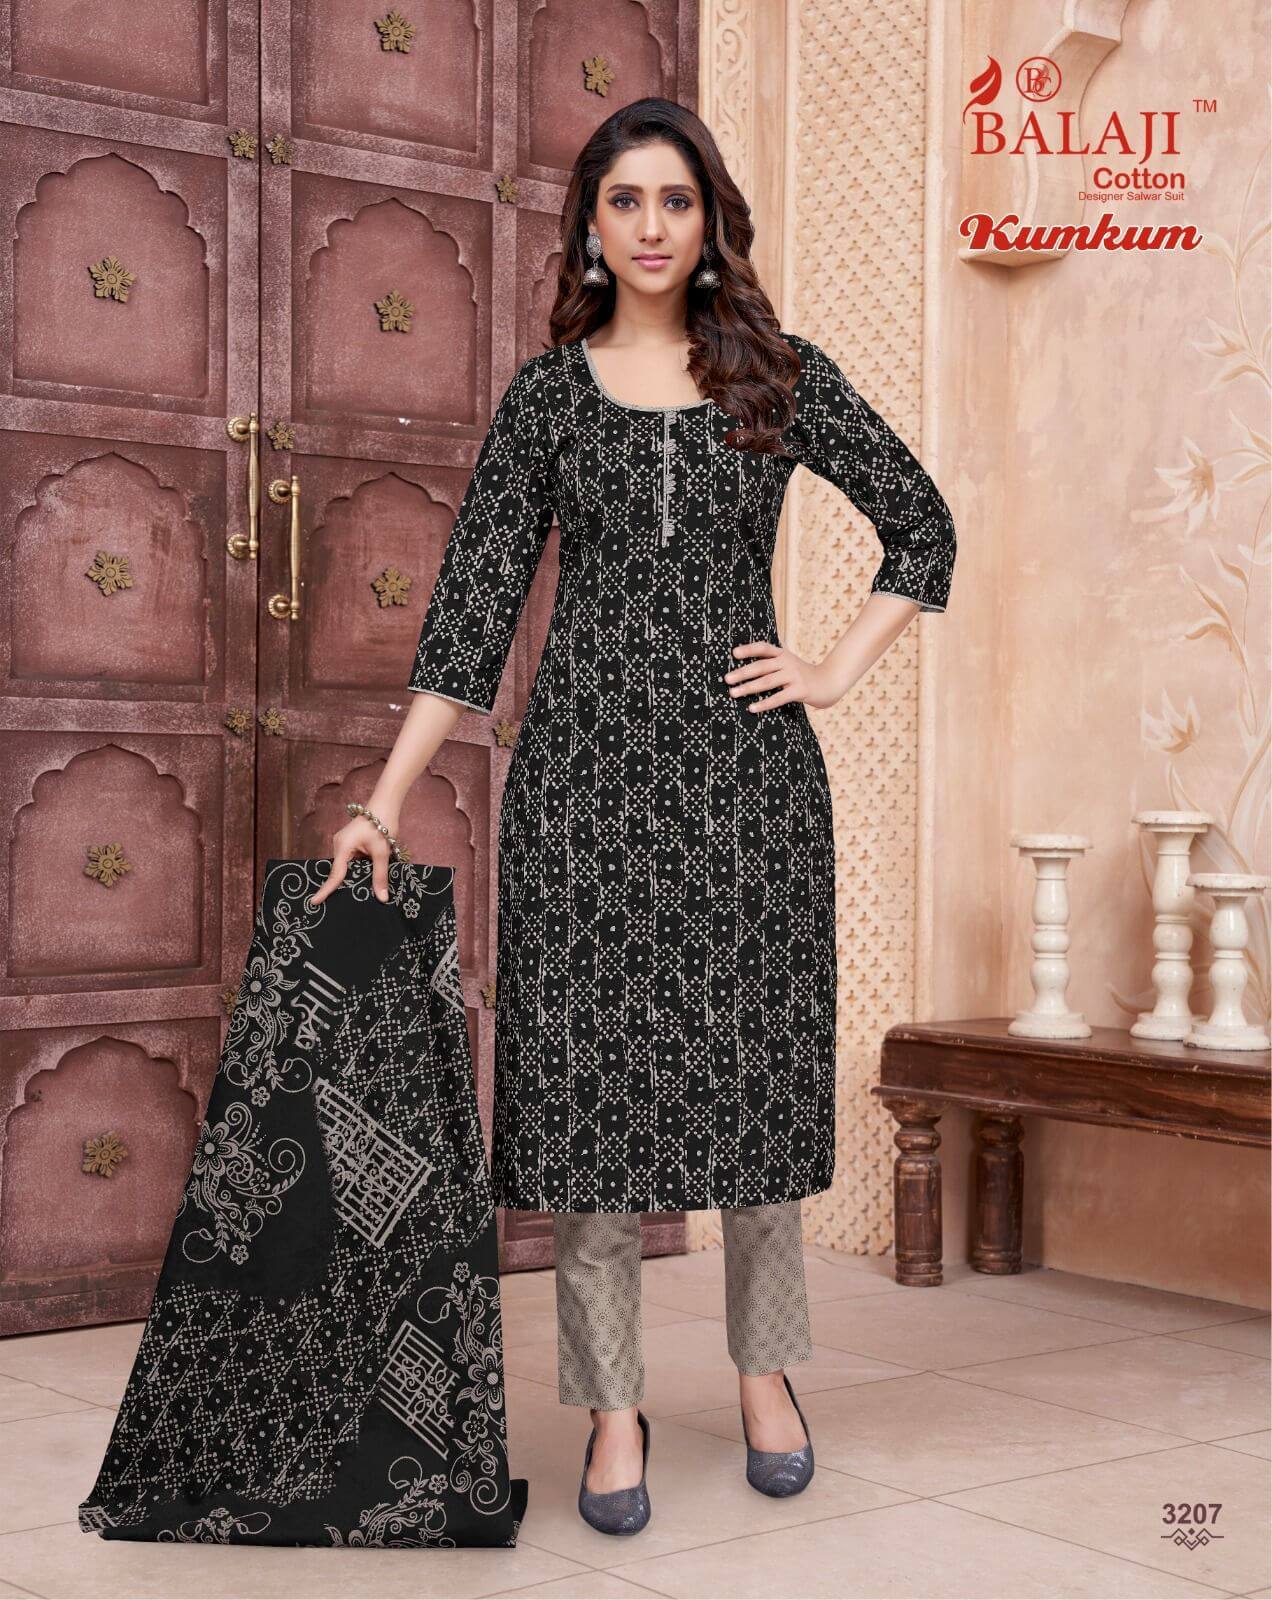 Balaji Cotton Kumkum Vol 32 Readymade Dress Catalog collection 2